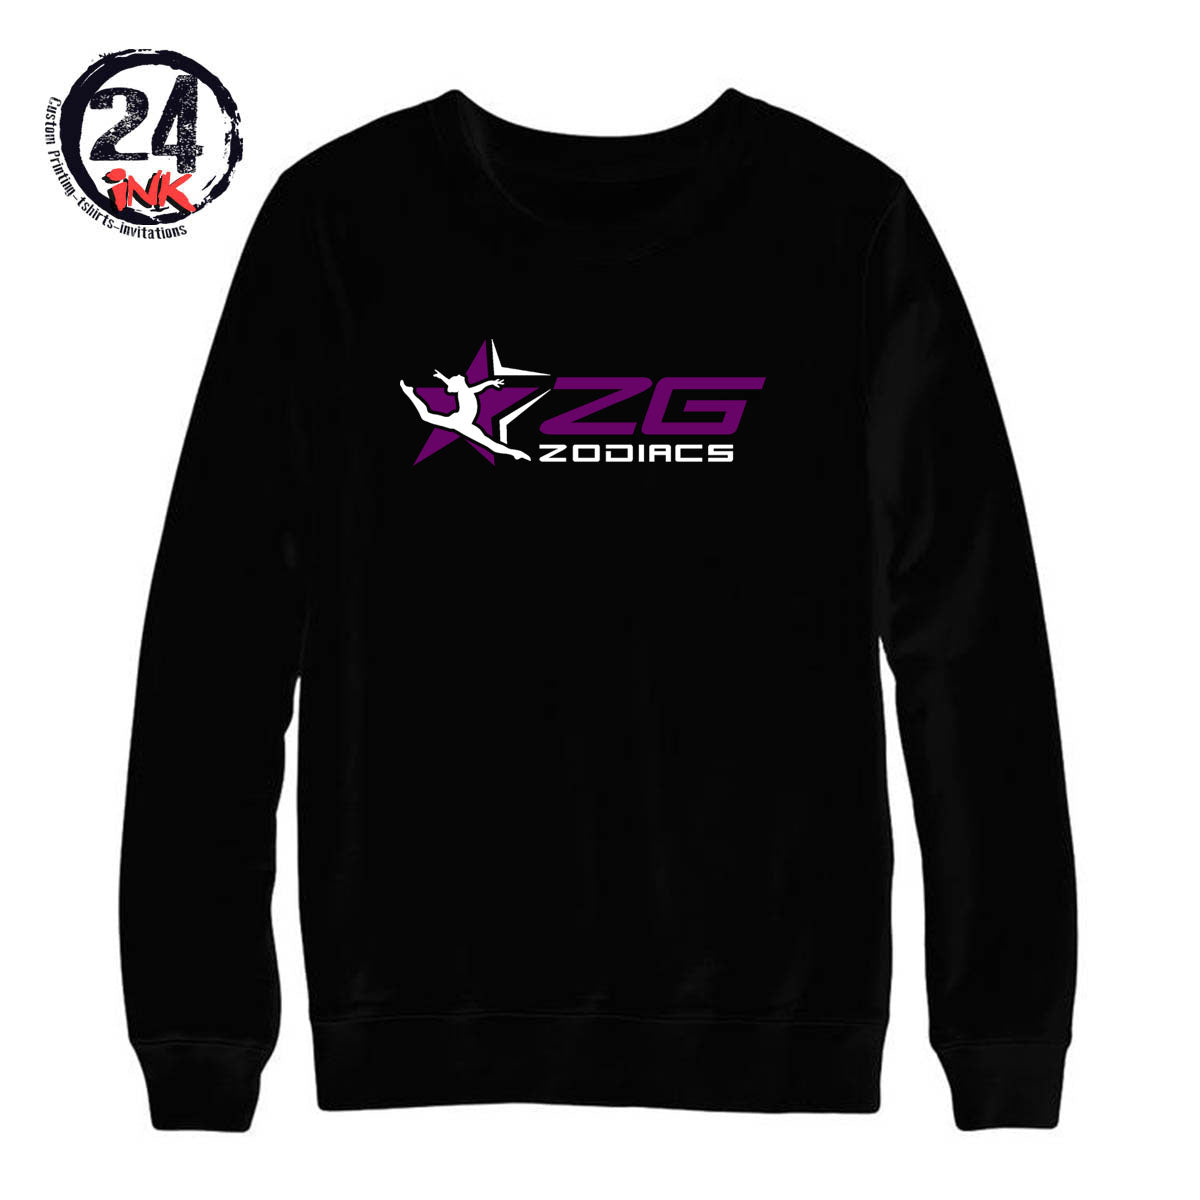 Zodiac logo non hooded sweatshirt